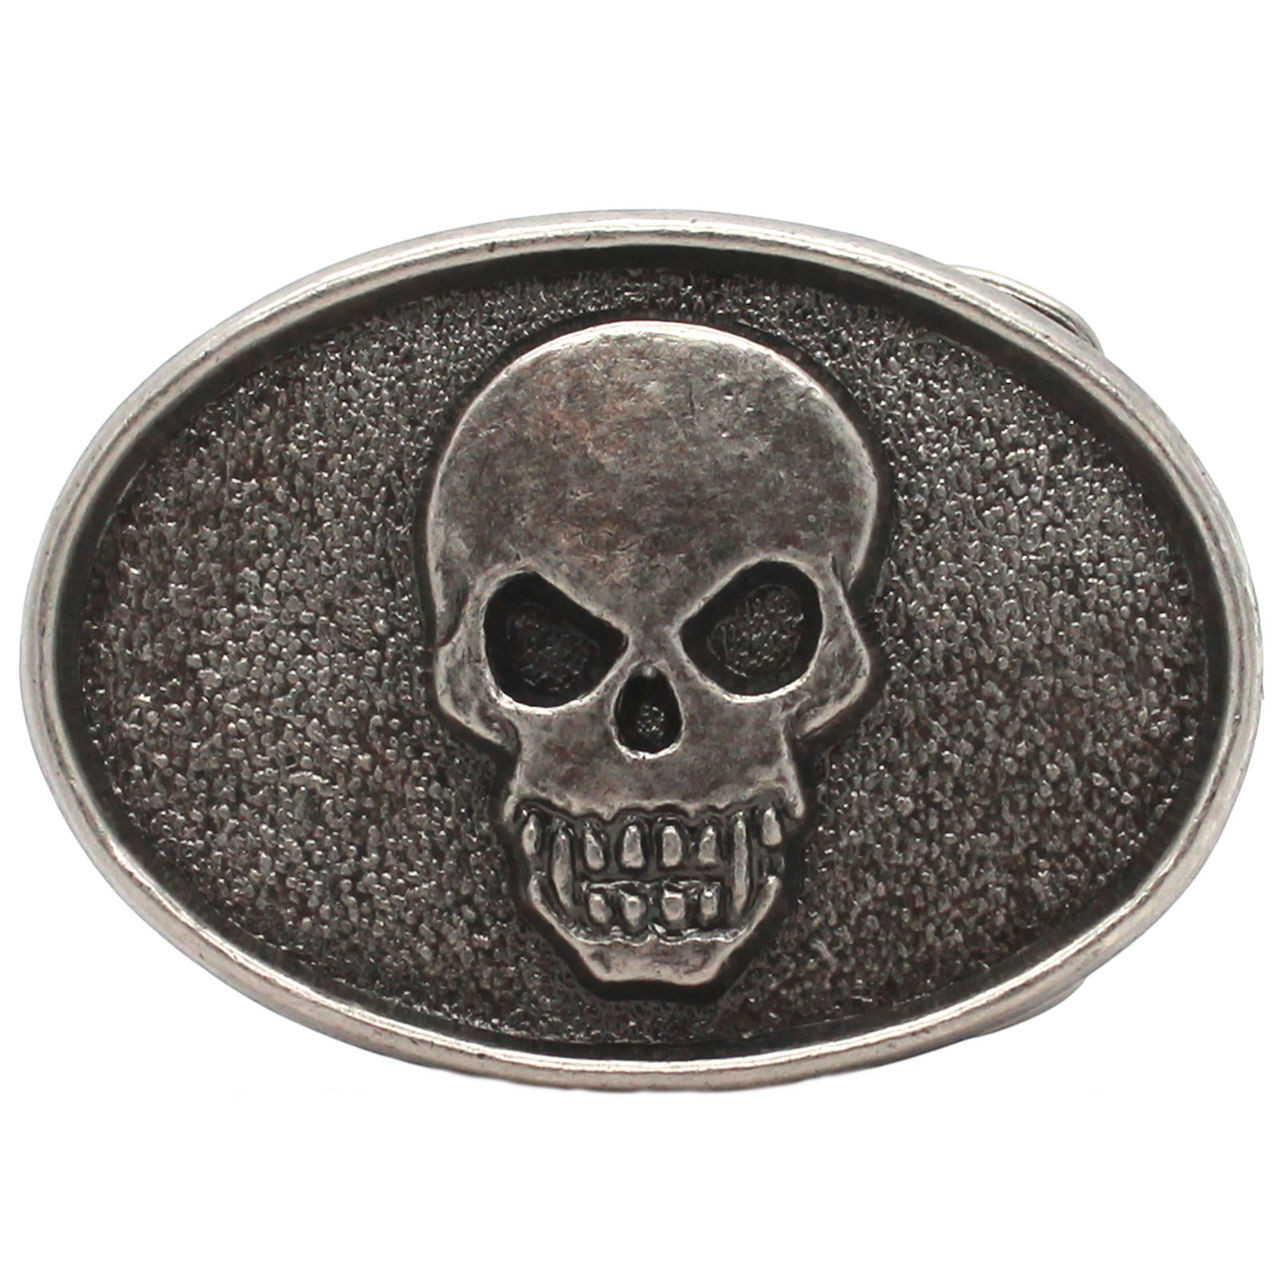  Skull Head Metal Belt Buckle Antique Nickel 6003-21 USA